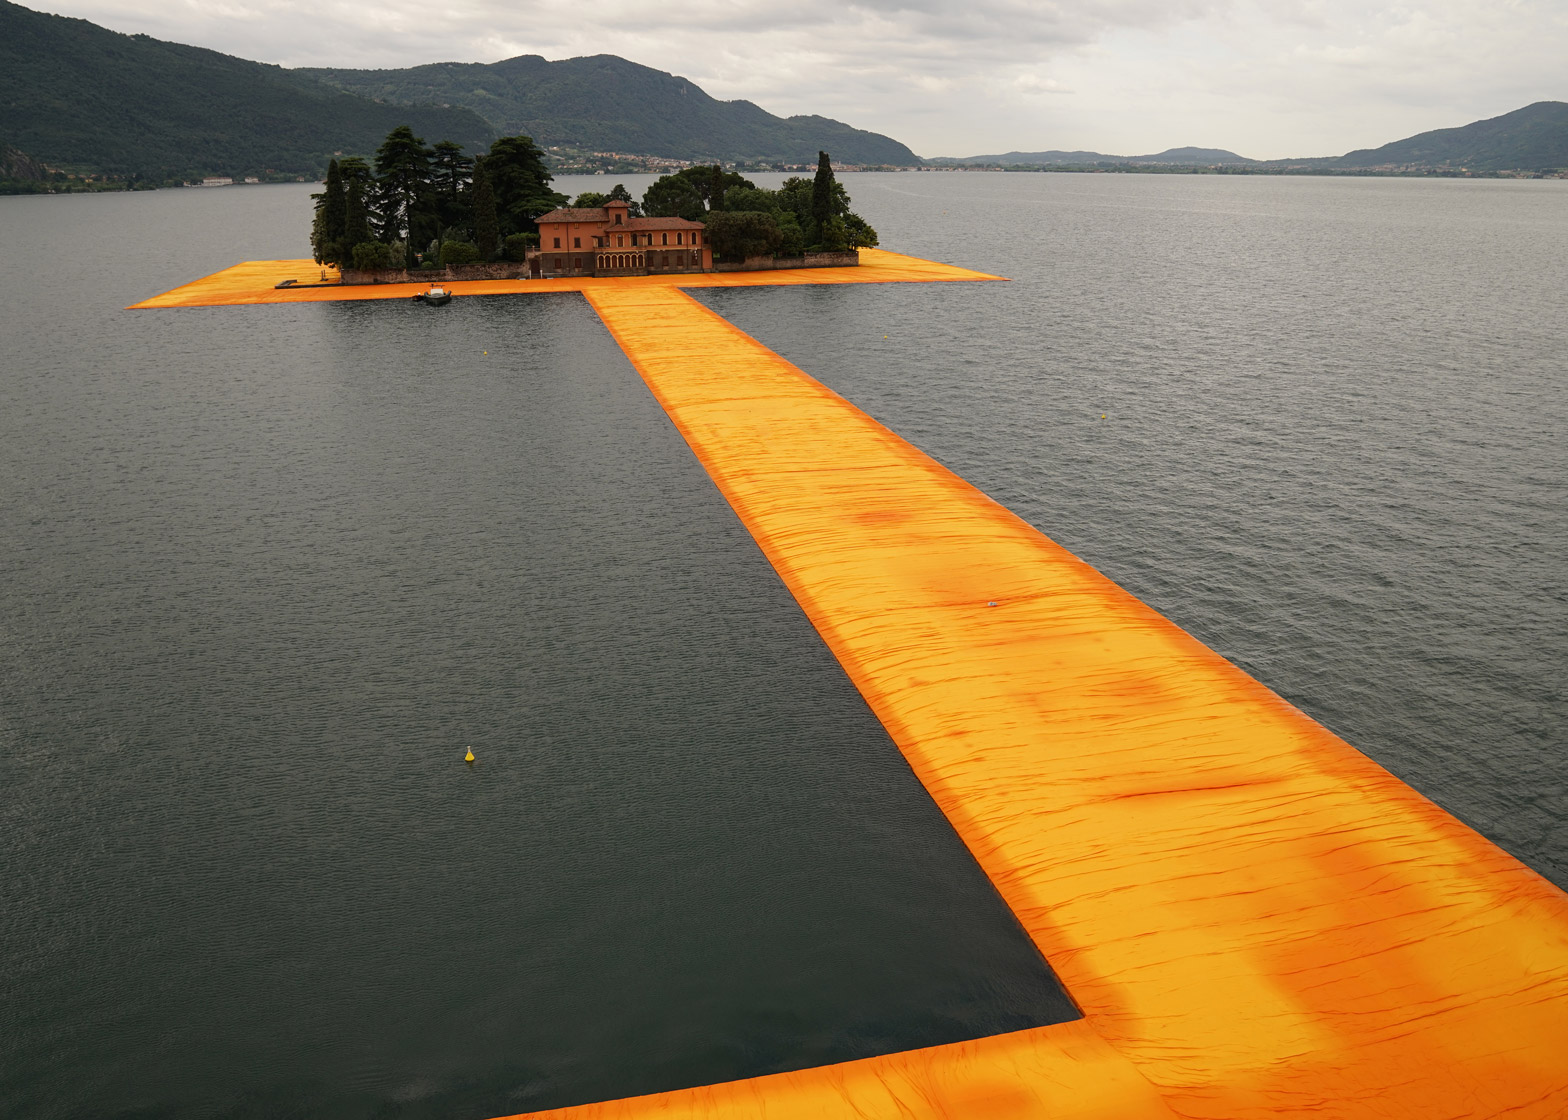 floating-piers-christo-lake-iseo-italy-june-2016-orange-yellow-fabric-birds-eye_dezeen_1568_6